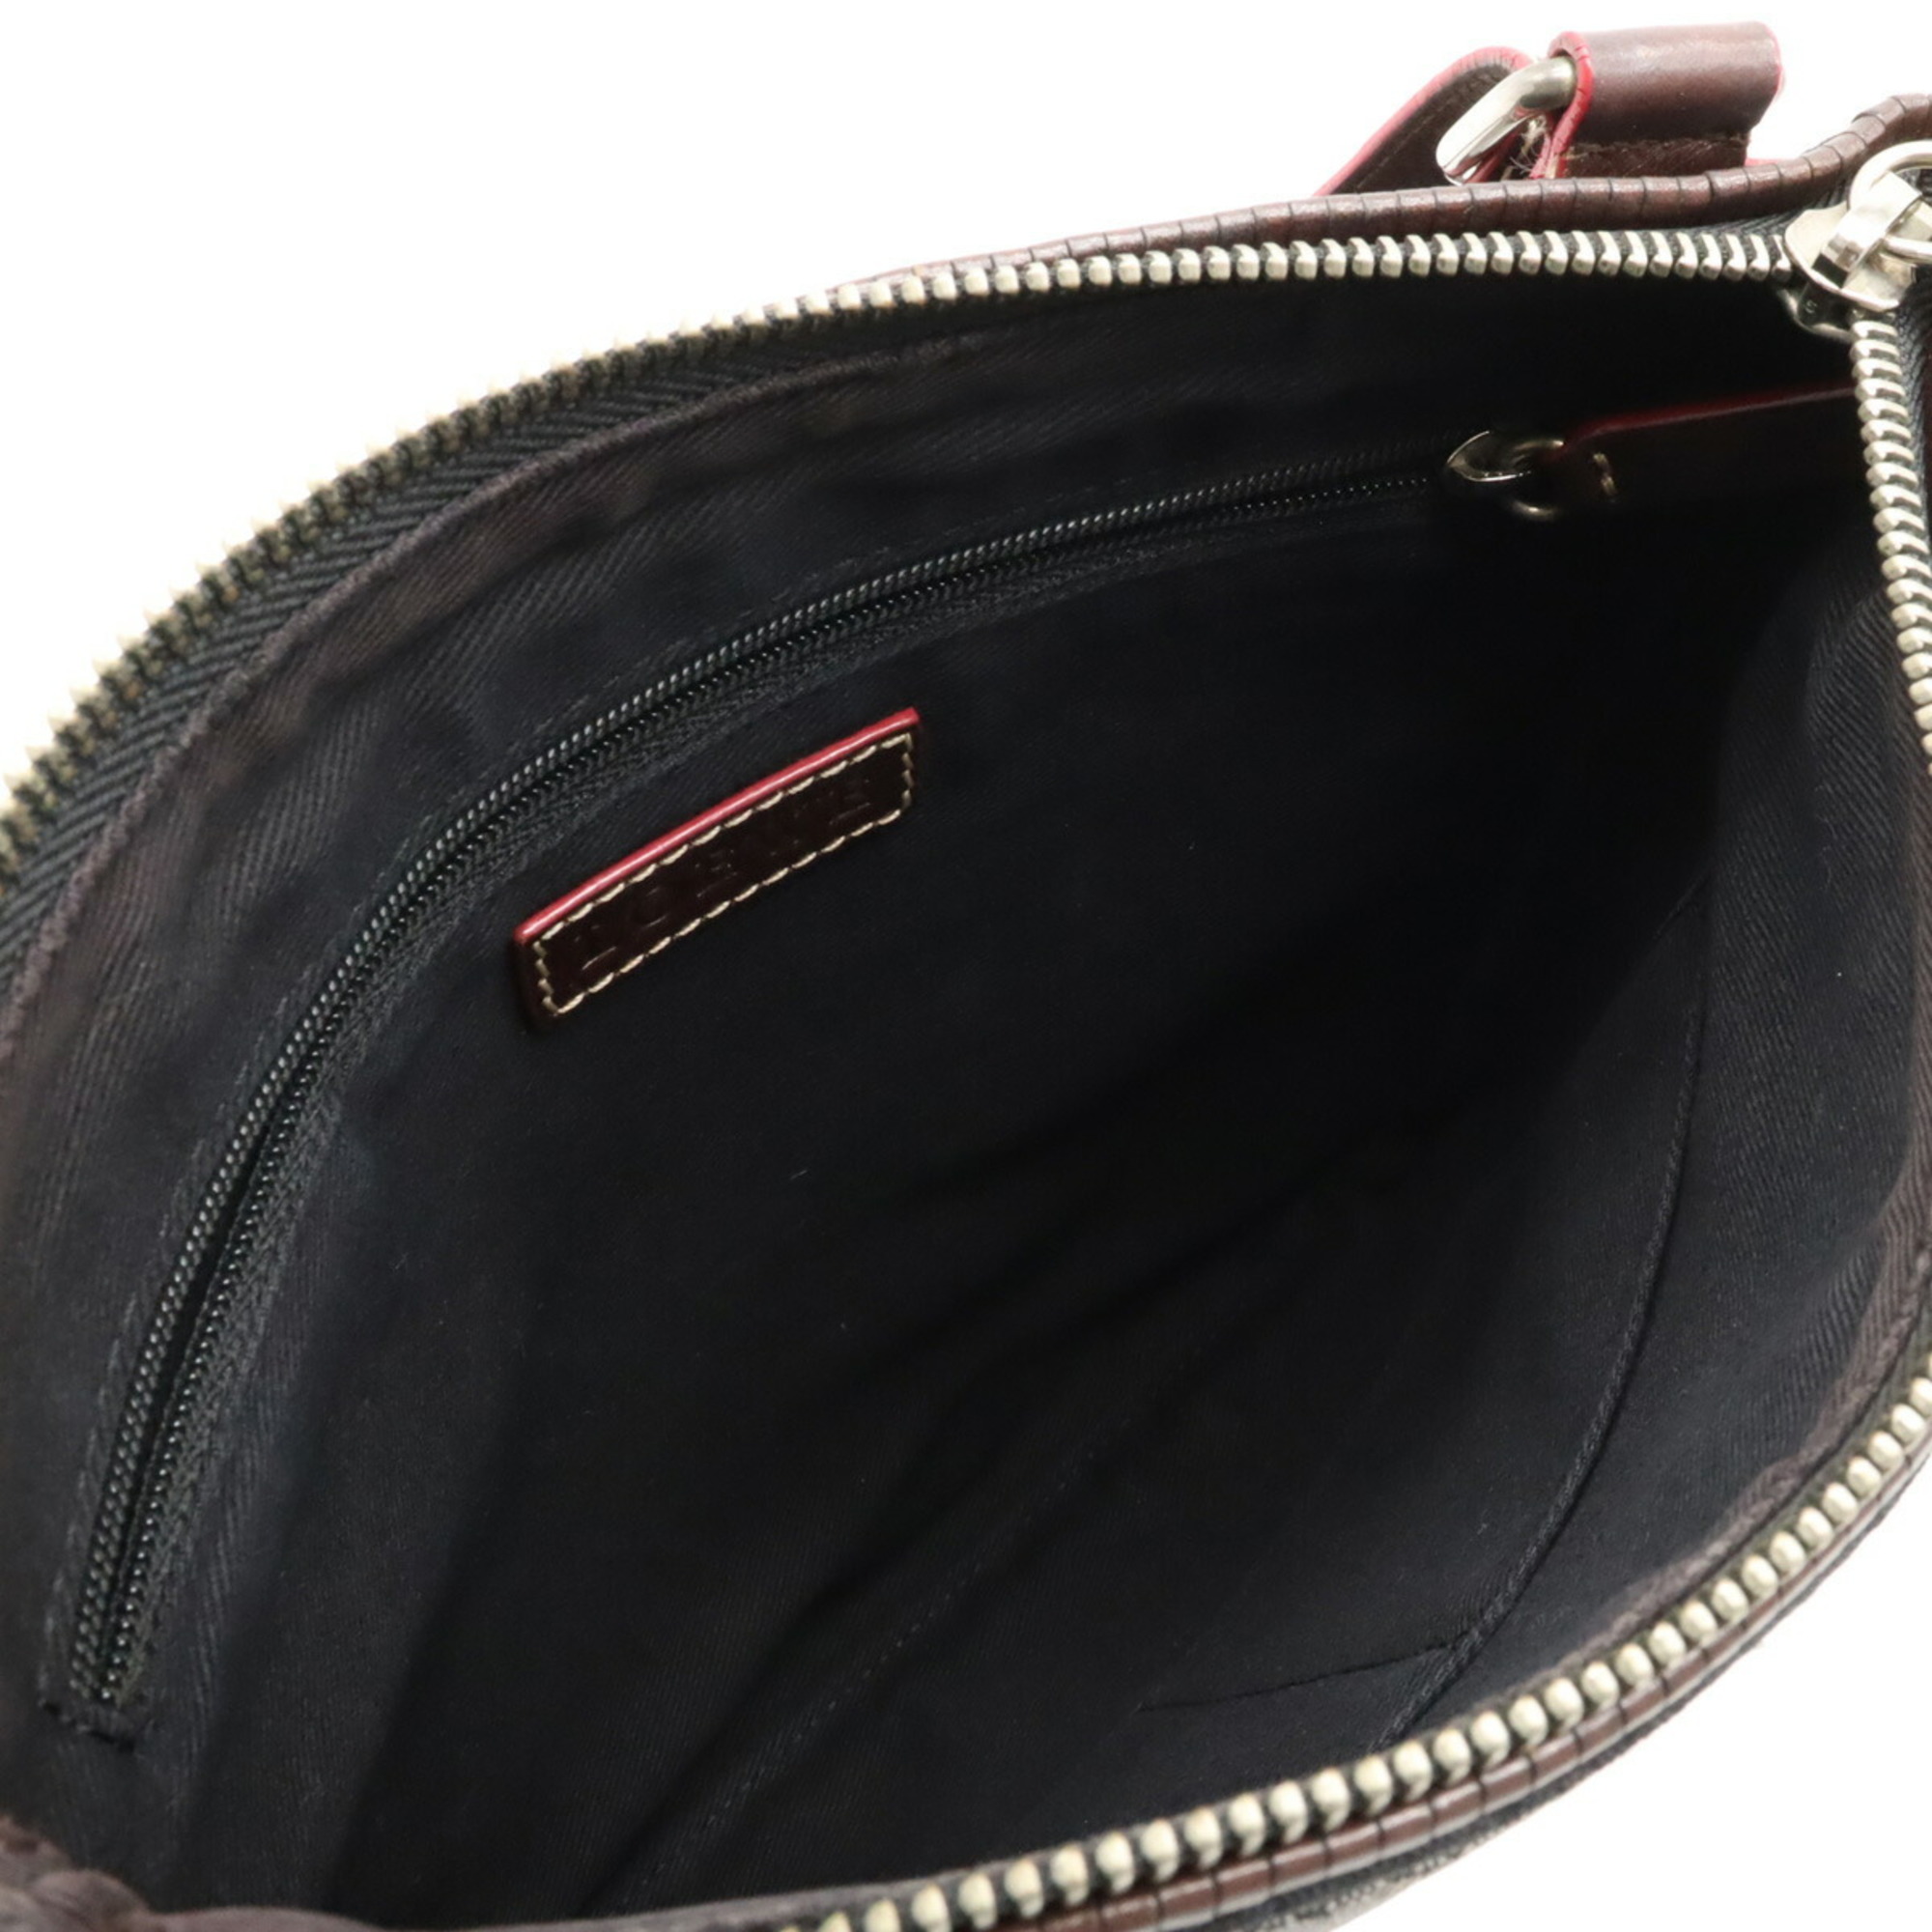 LOEWE Anagram Shoulder Bag Nylon Canvas Leather Black Grey Bordeaux